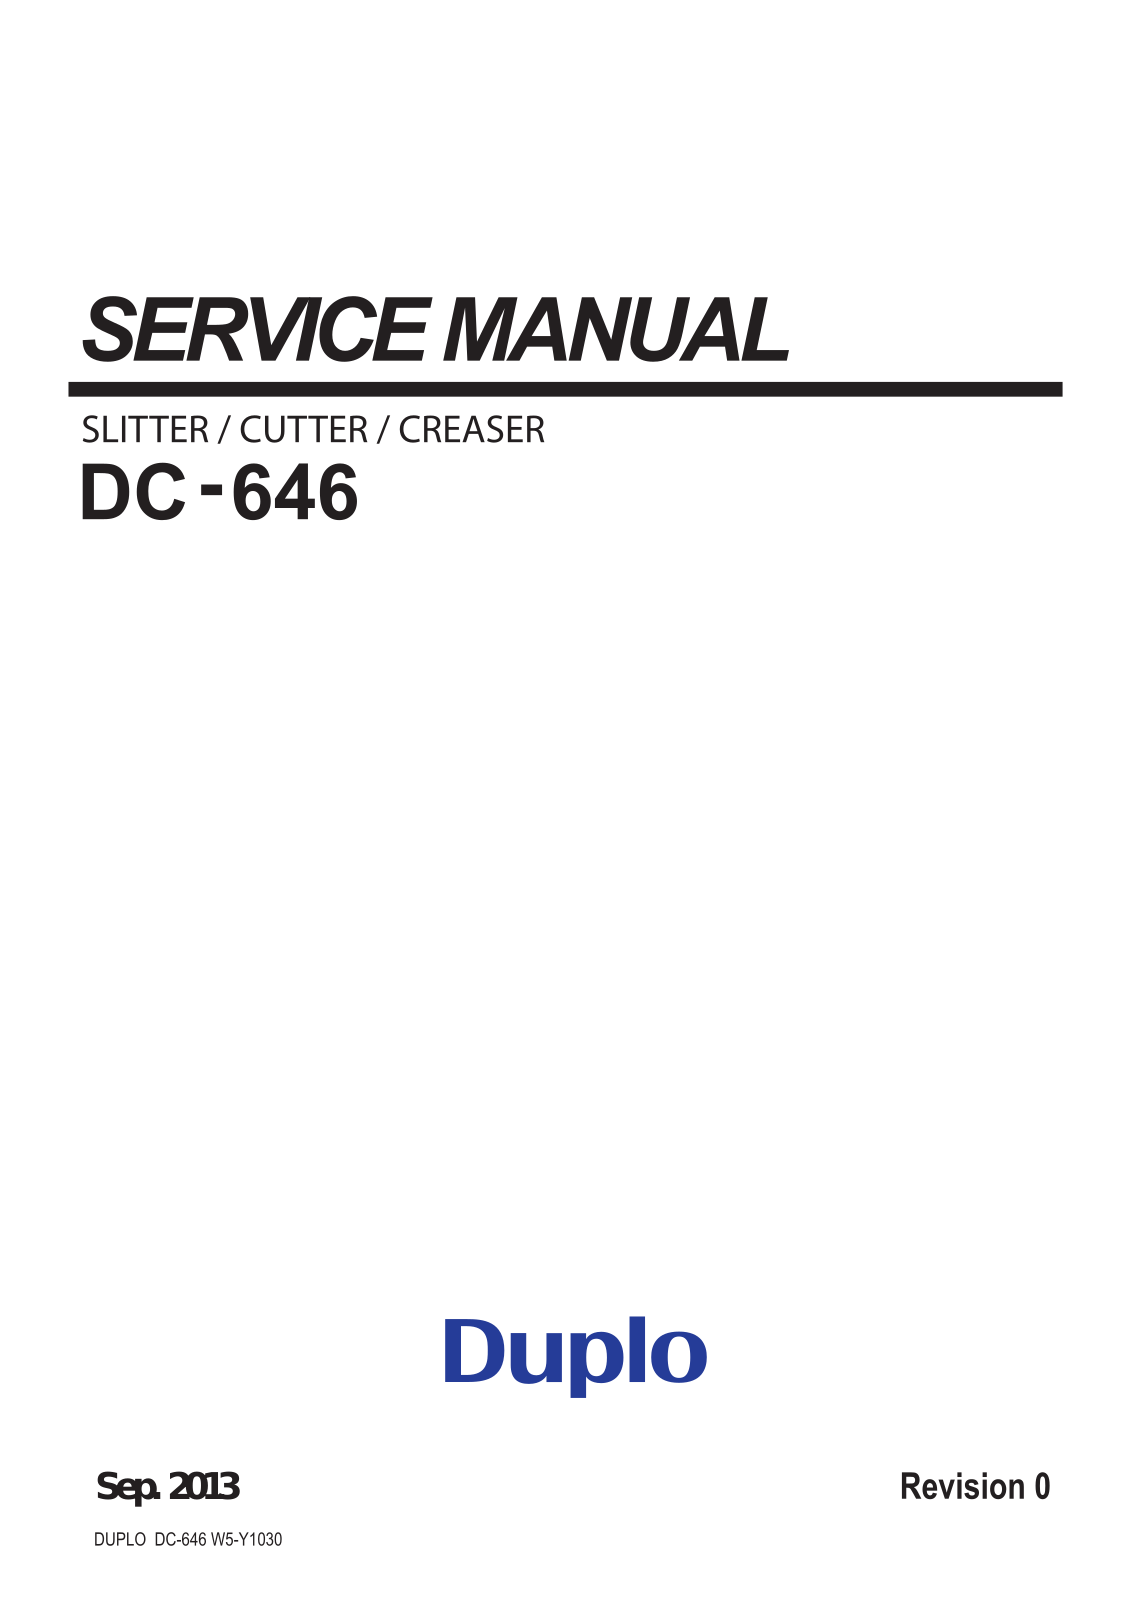 Duplo DC-646 Service Manual